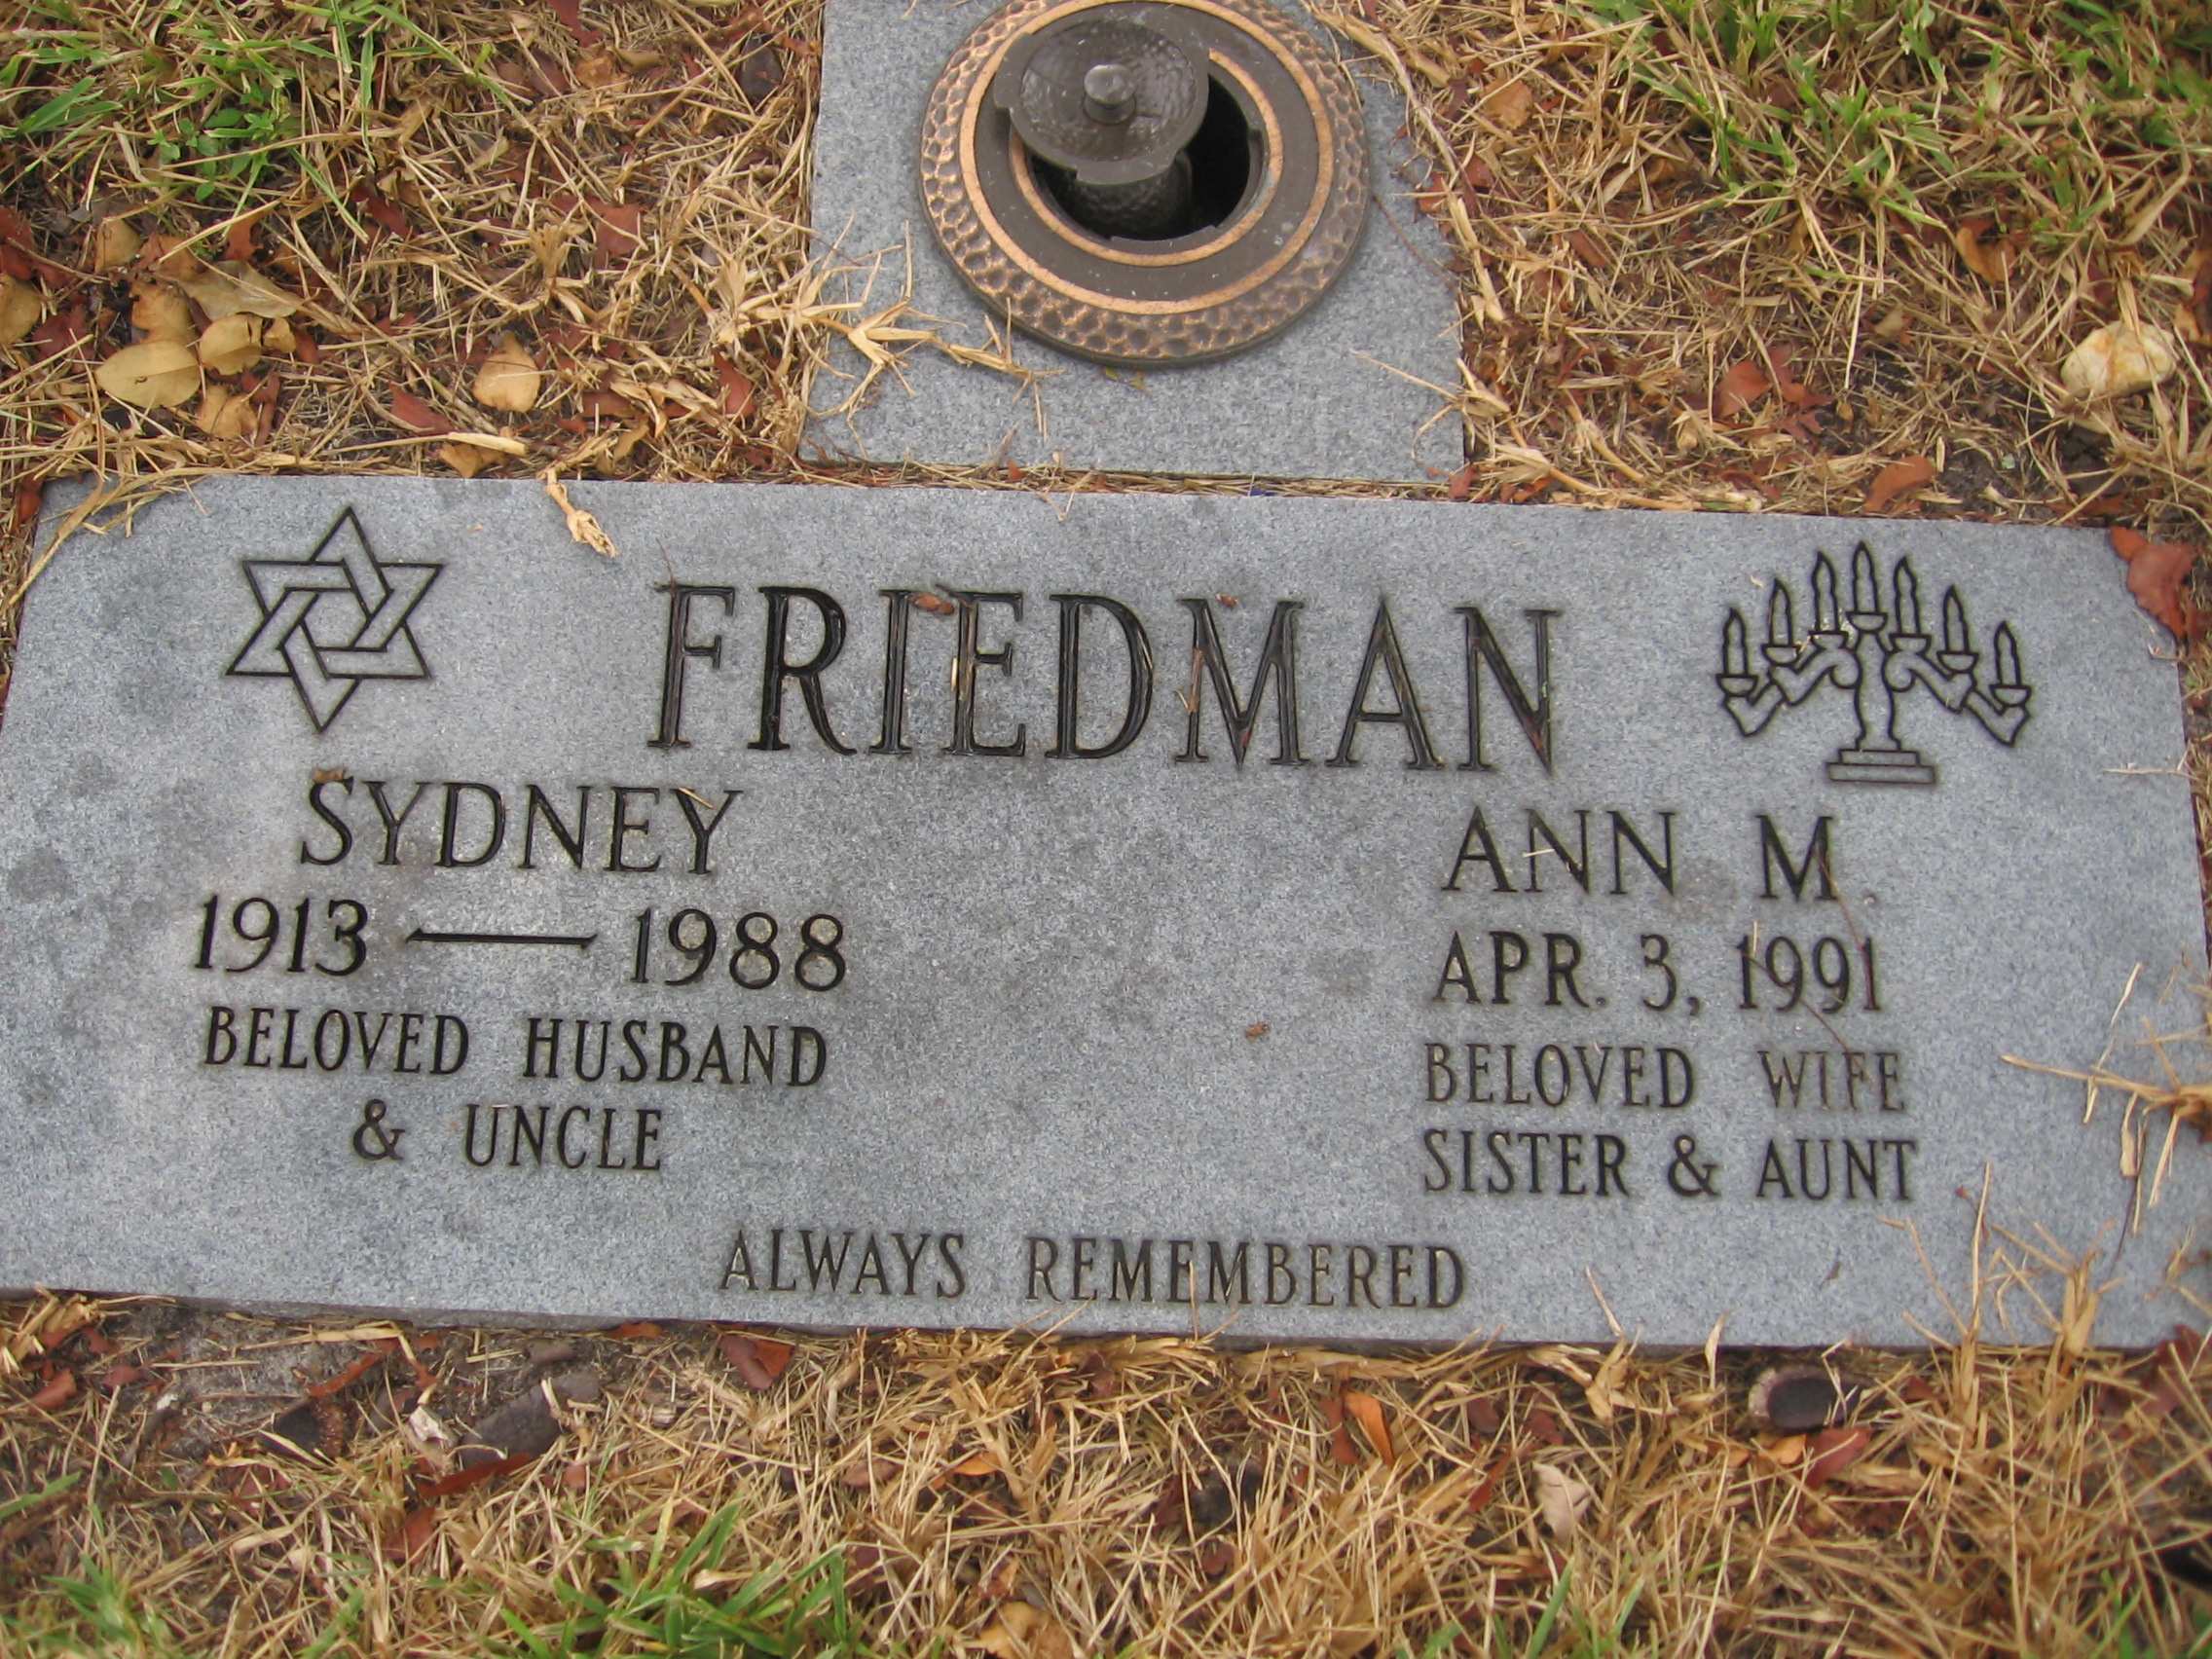 Sydney Friedman